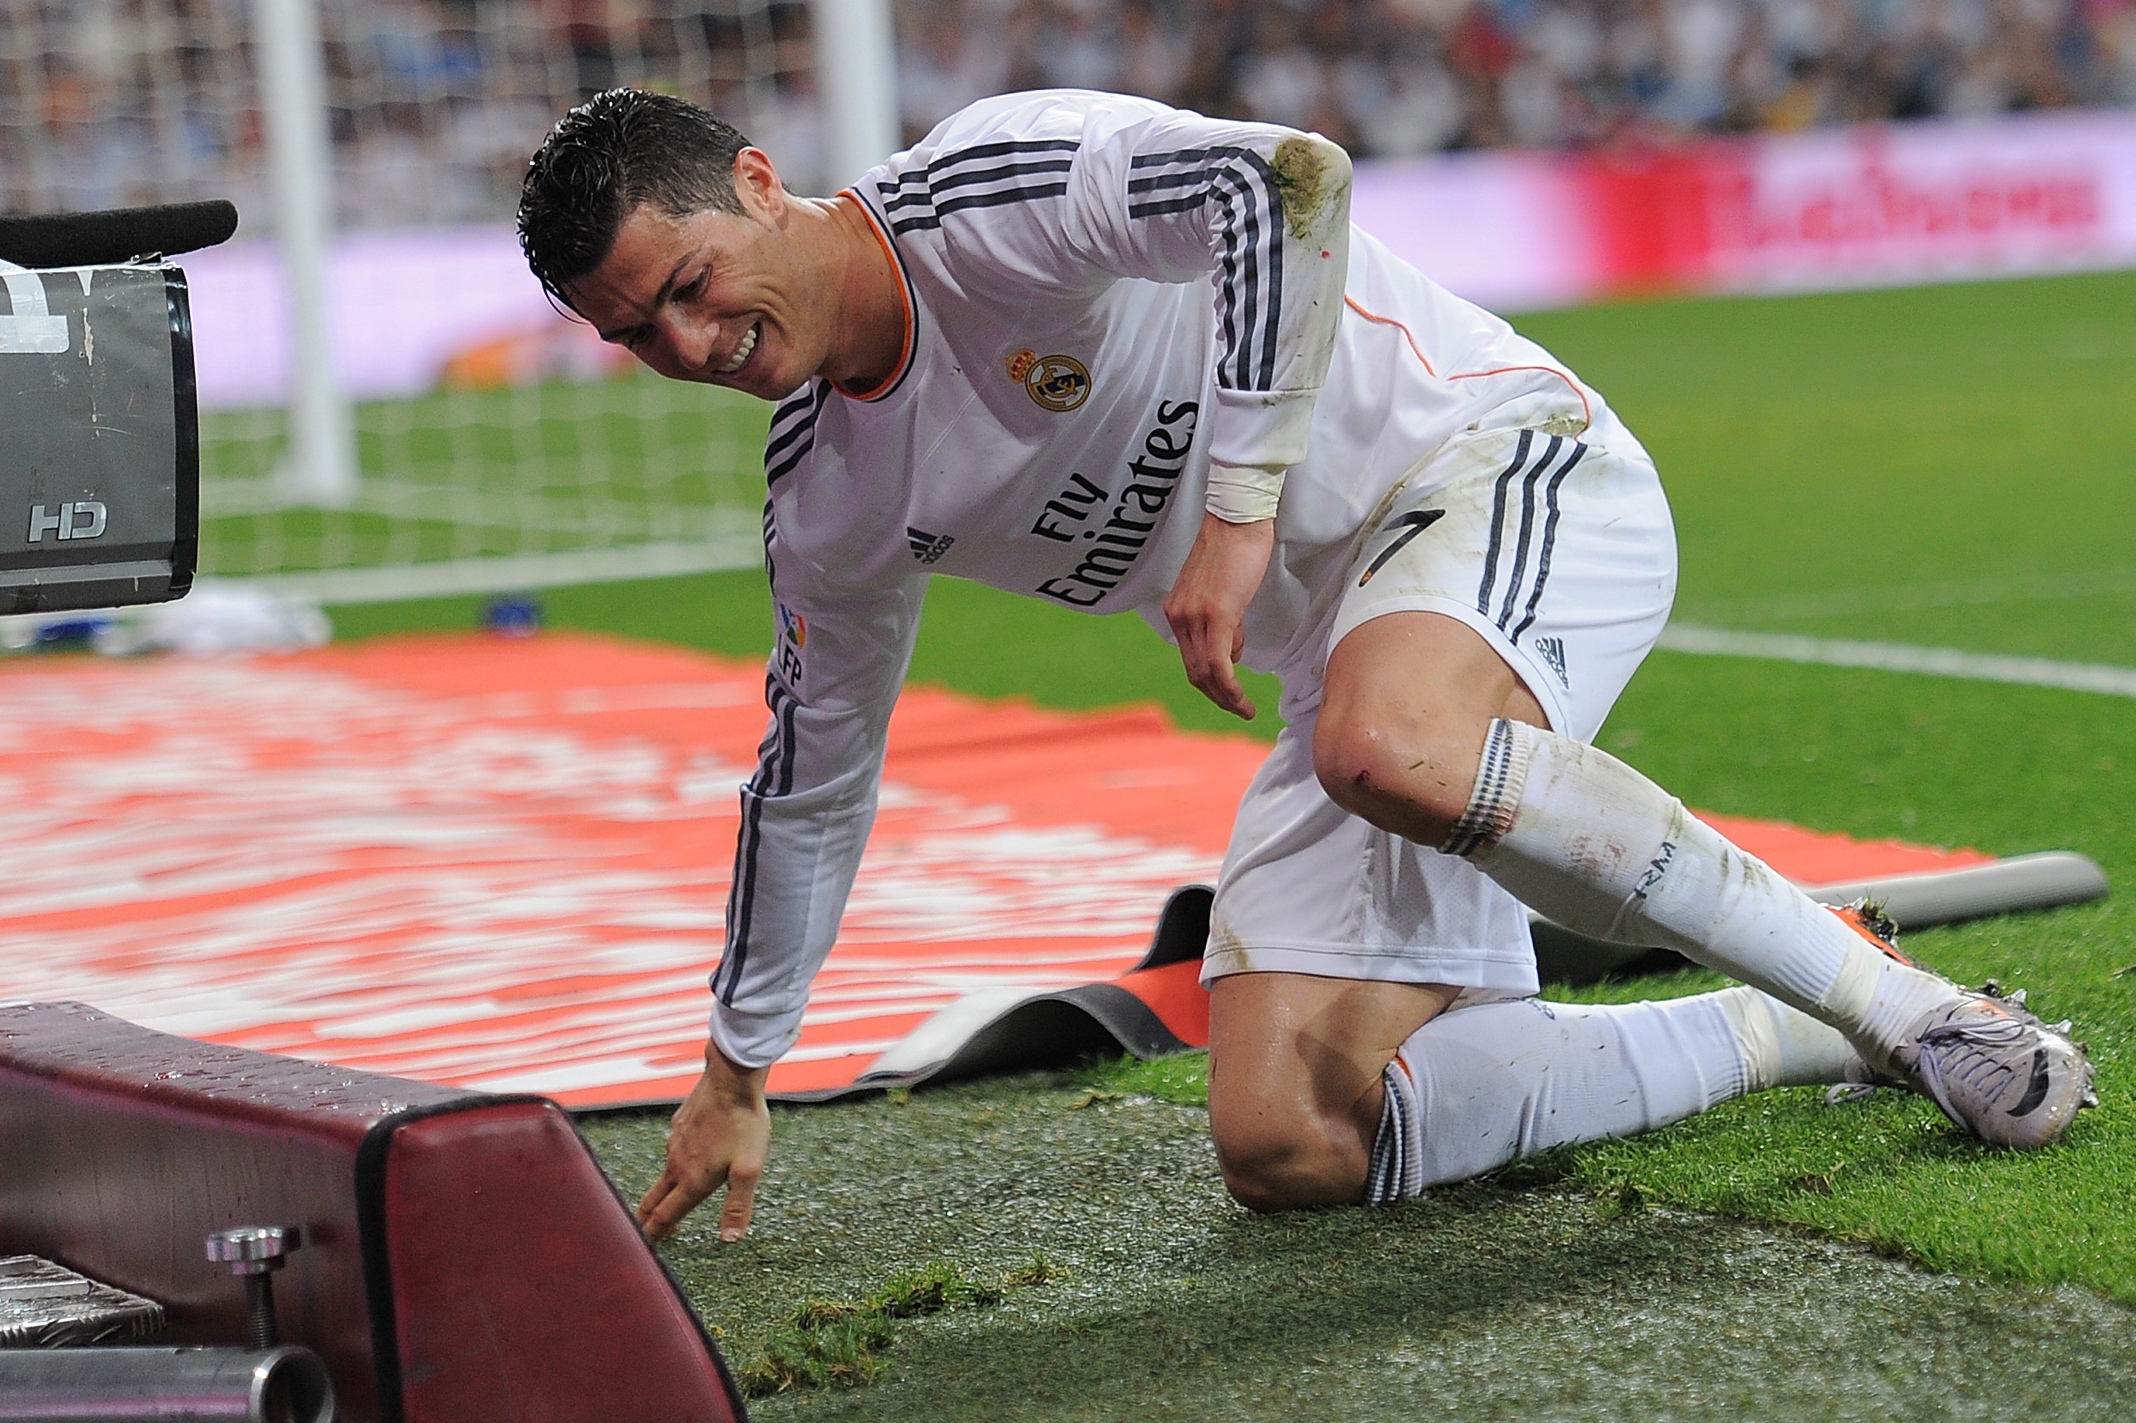 Cristiano Ronaldo scores a crotch goal 